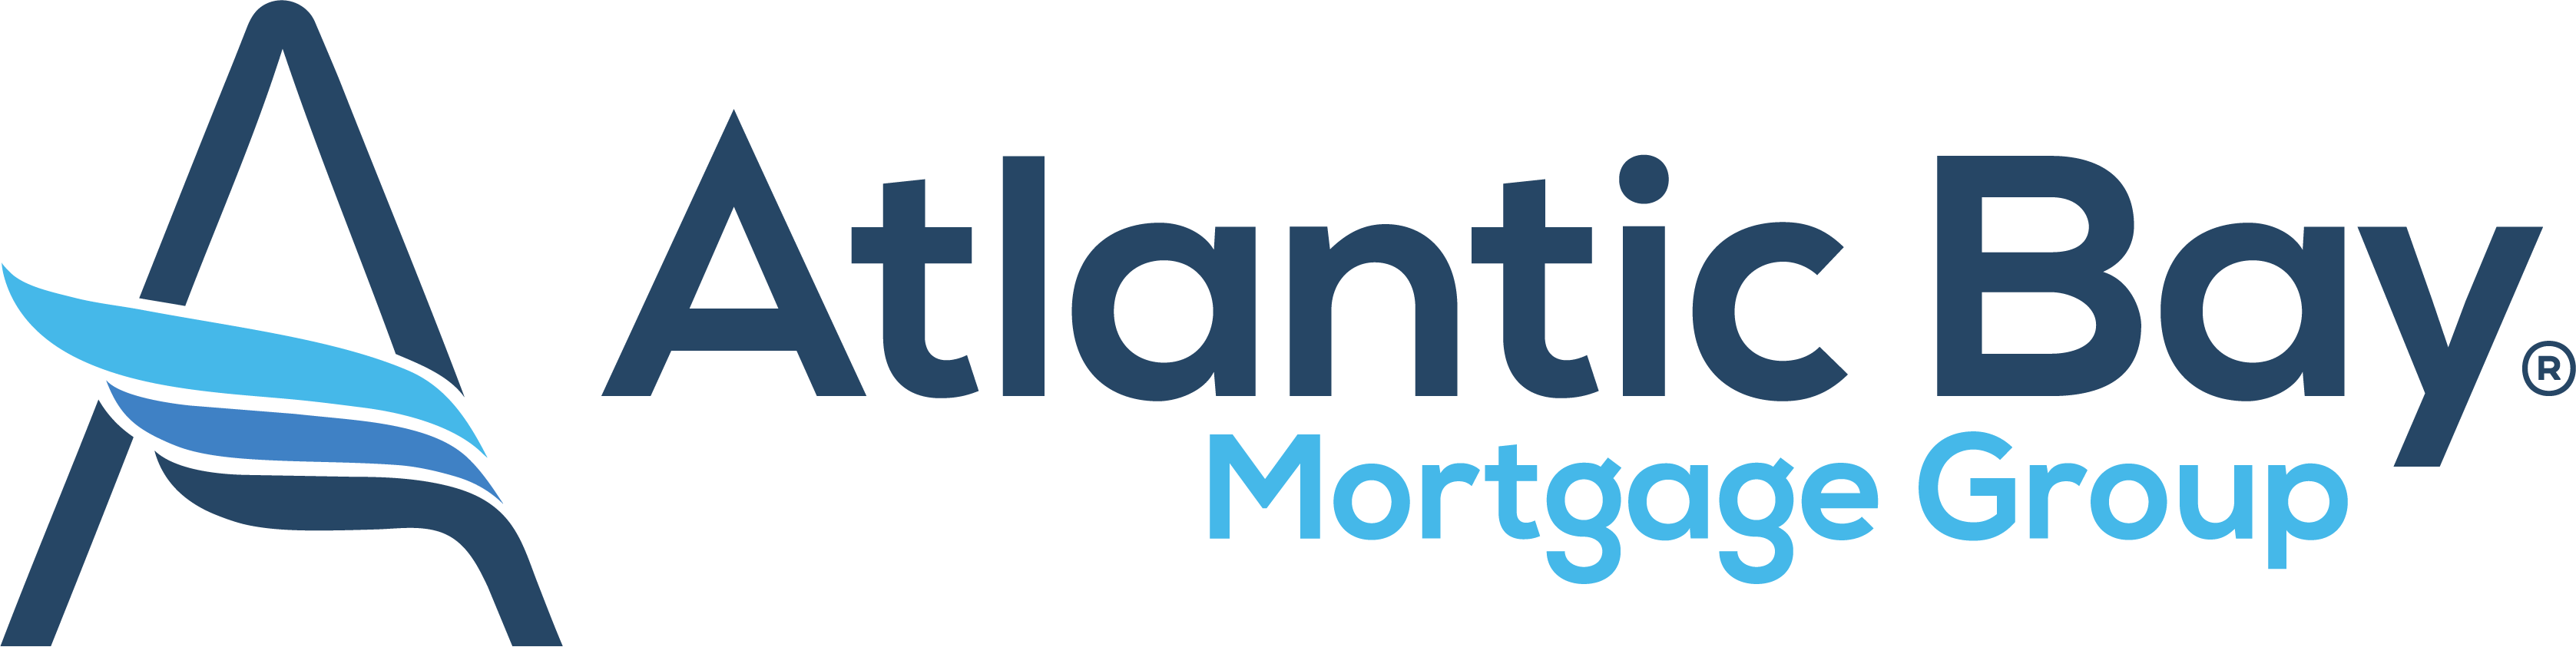 Atlantic Bay Mortgage Group Company Logo